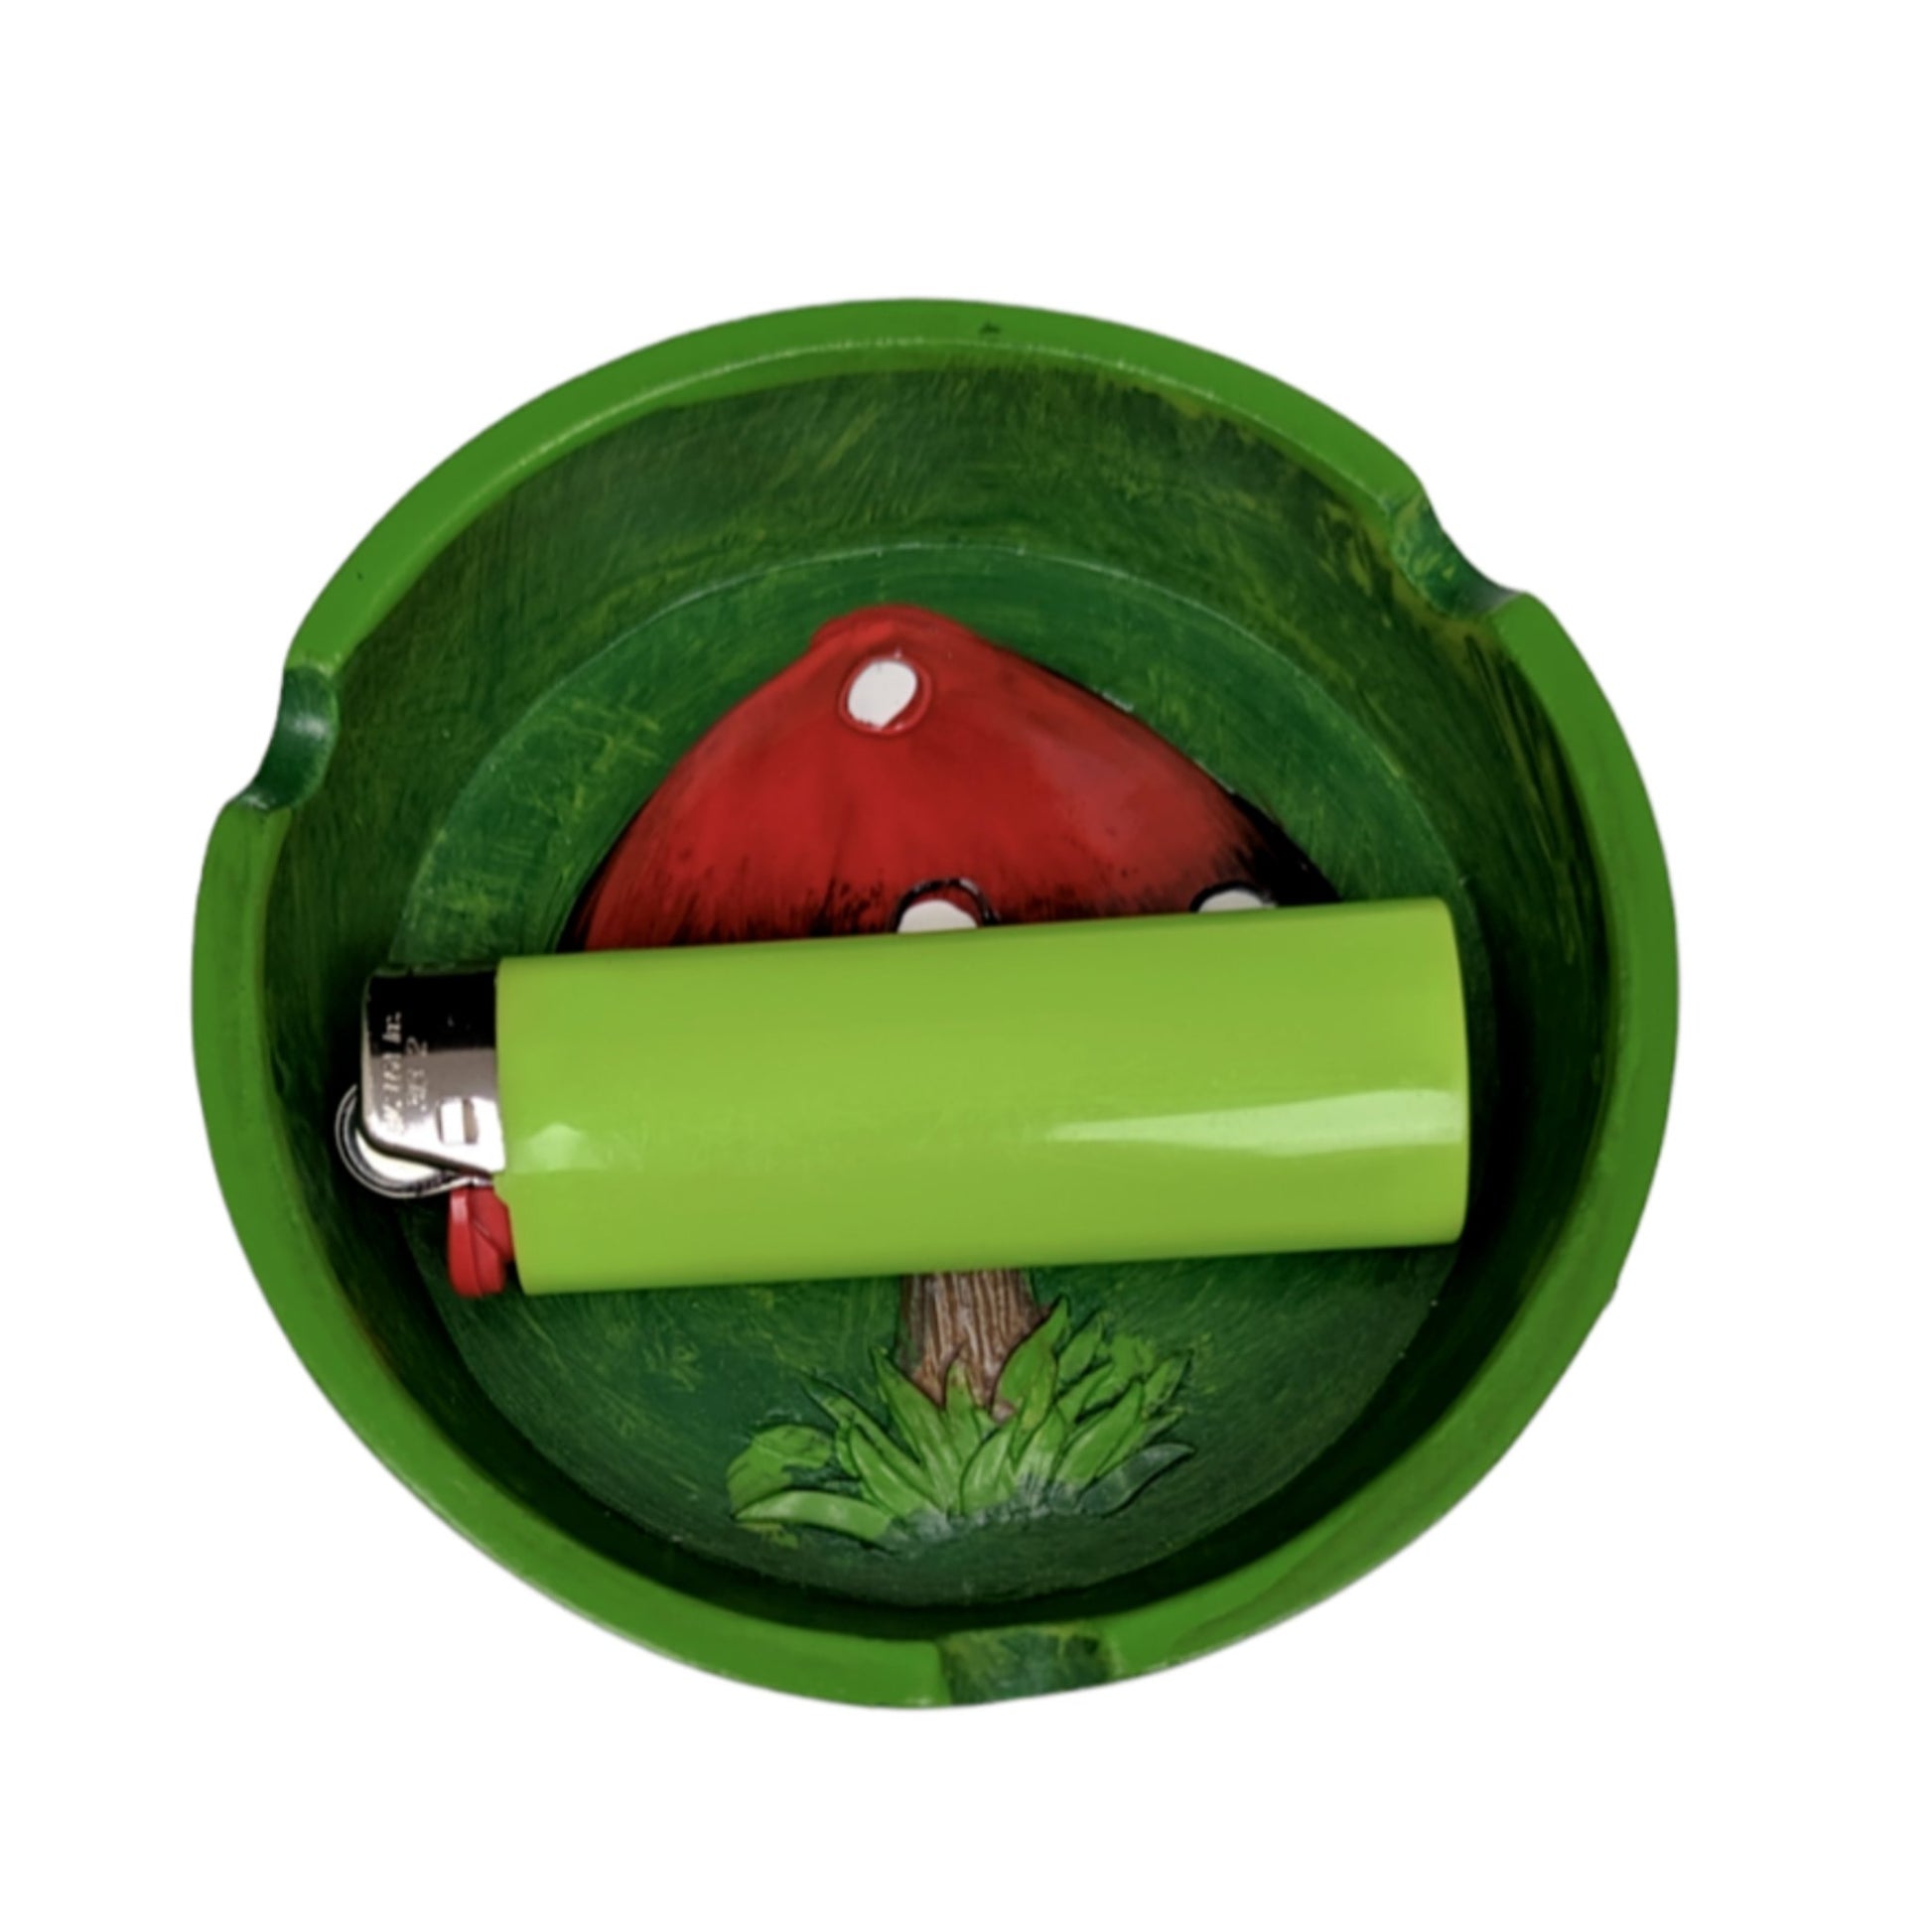 Ashtray Green Mushroom Design - Perfect Smoking Accessory - The Headed West Smoke Shop